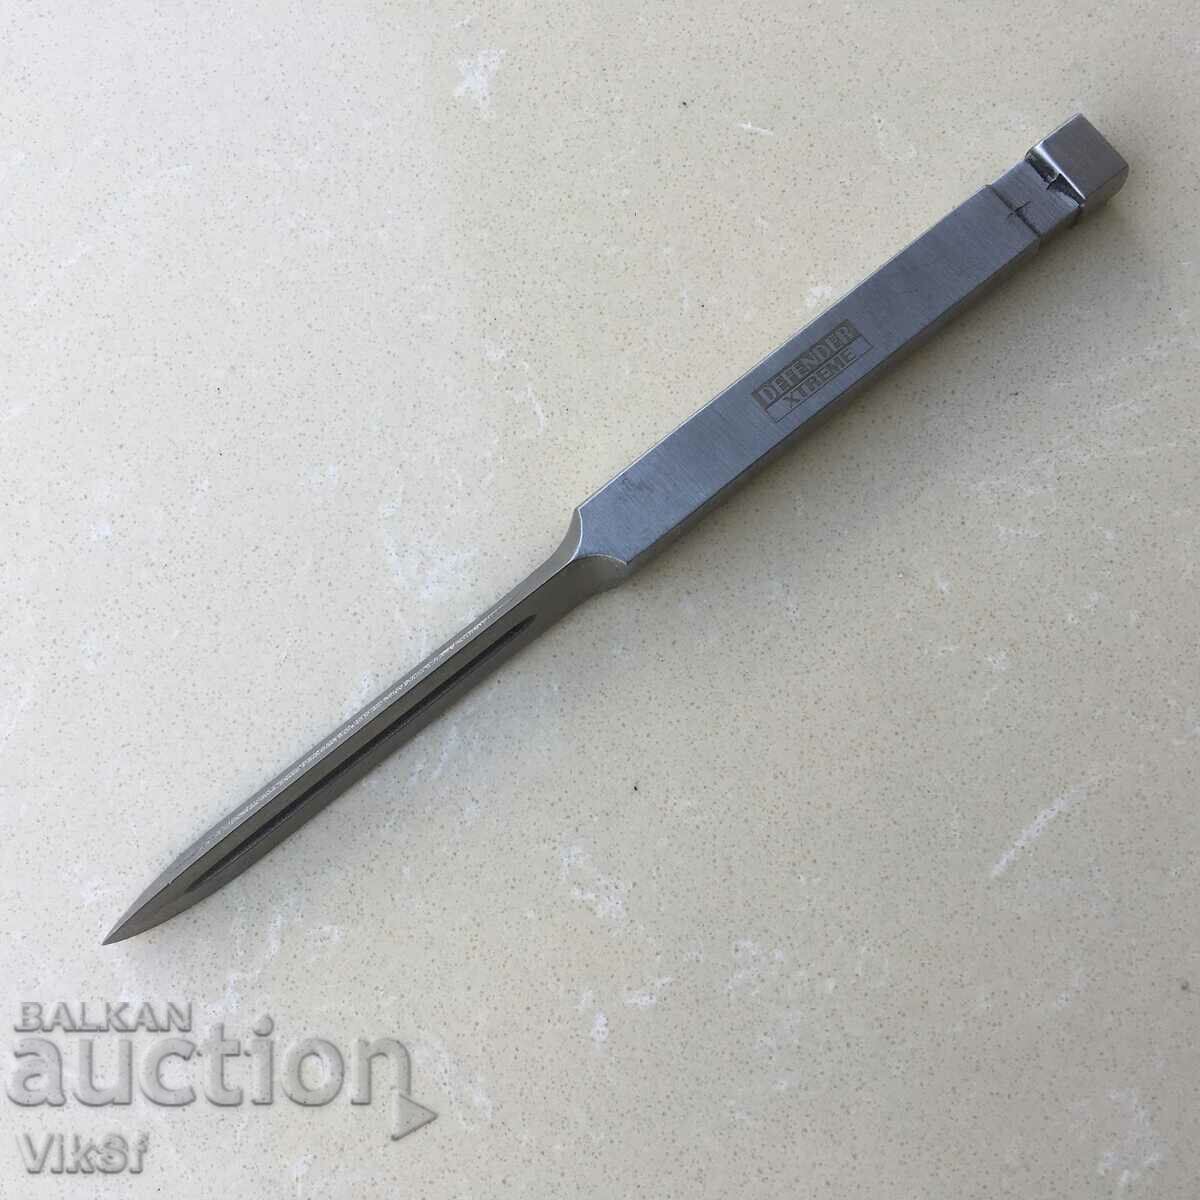 Kama urban knife Defender Extreme triangular blade and sheath